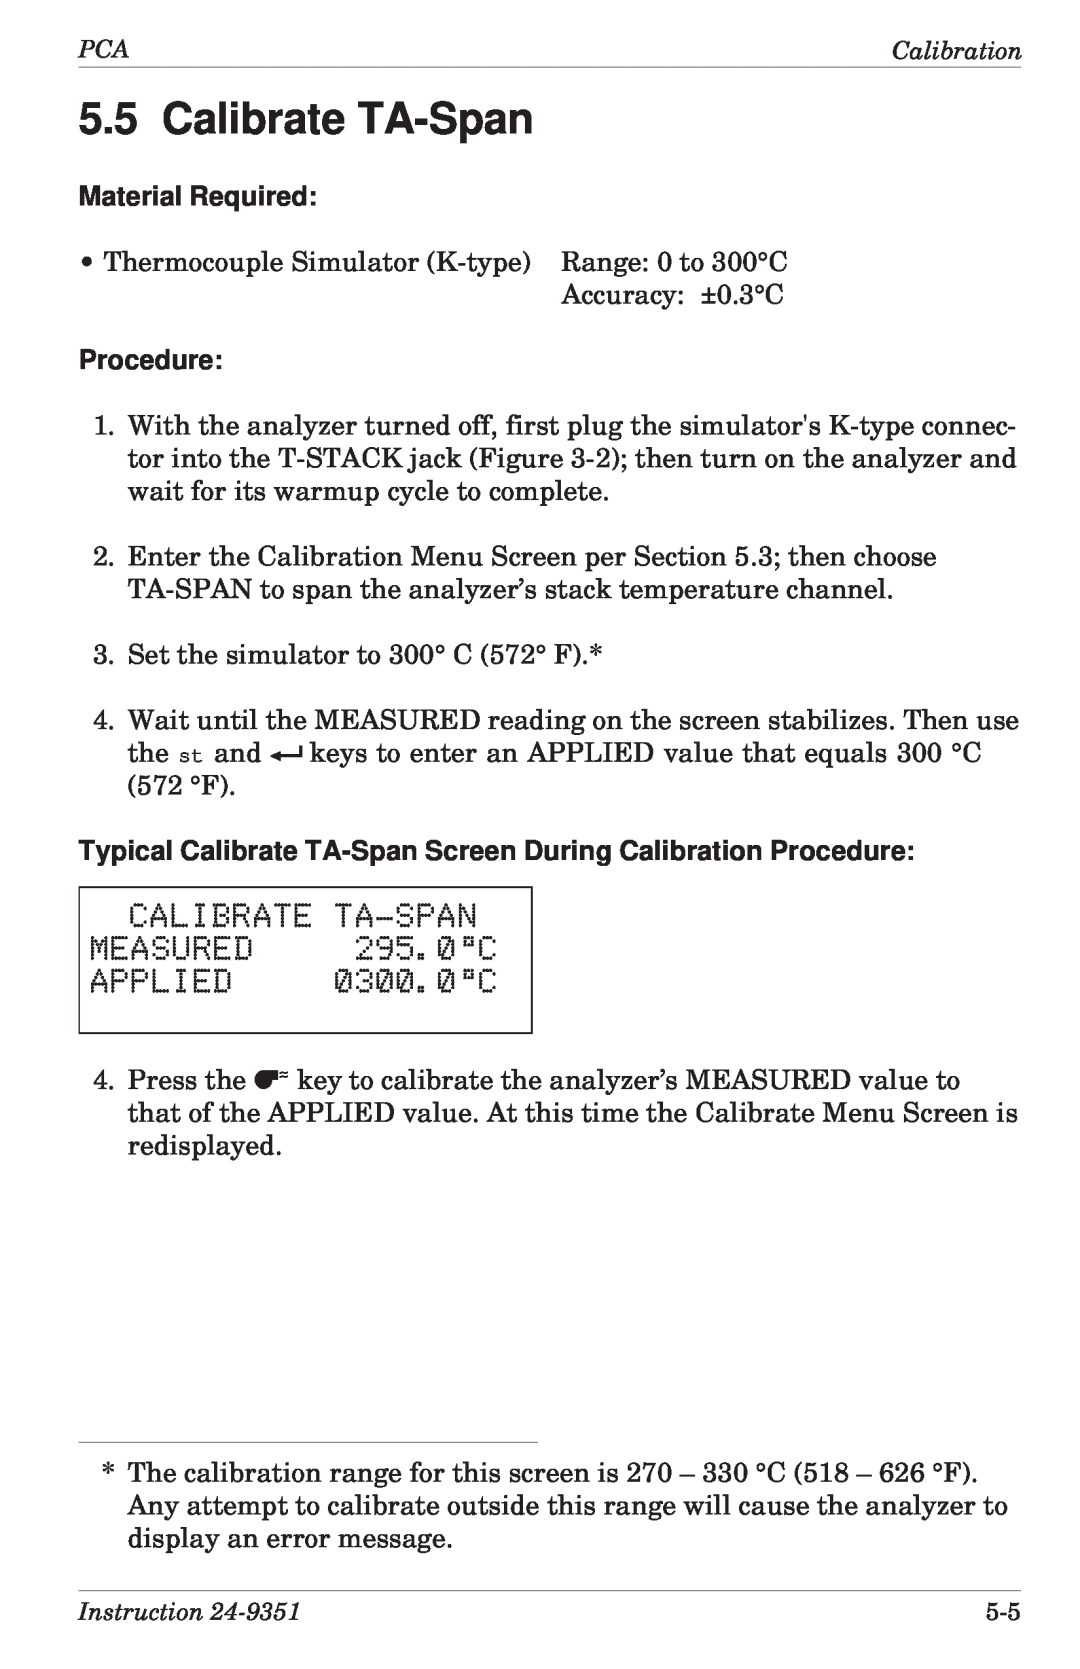 Bacharach 24-9351 manual Calibrate TA-Span, CALIBRATE TA-SPAN MEASURED 295.0C APPLIED 0300.0C, Material Required, Procedure 